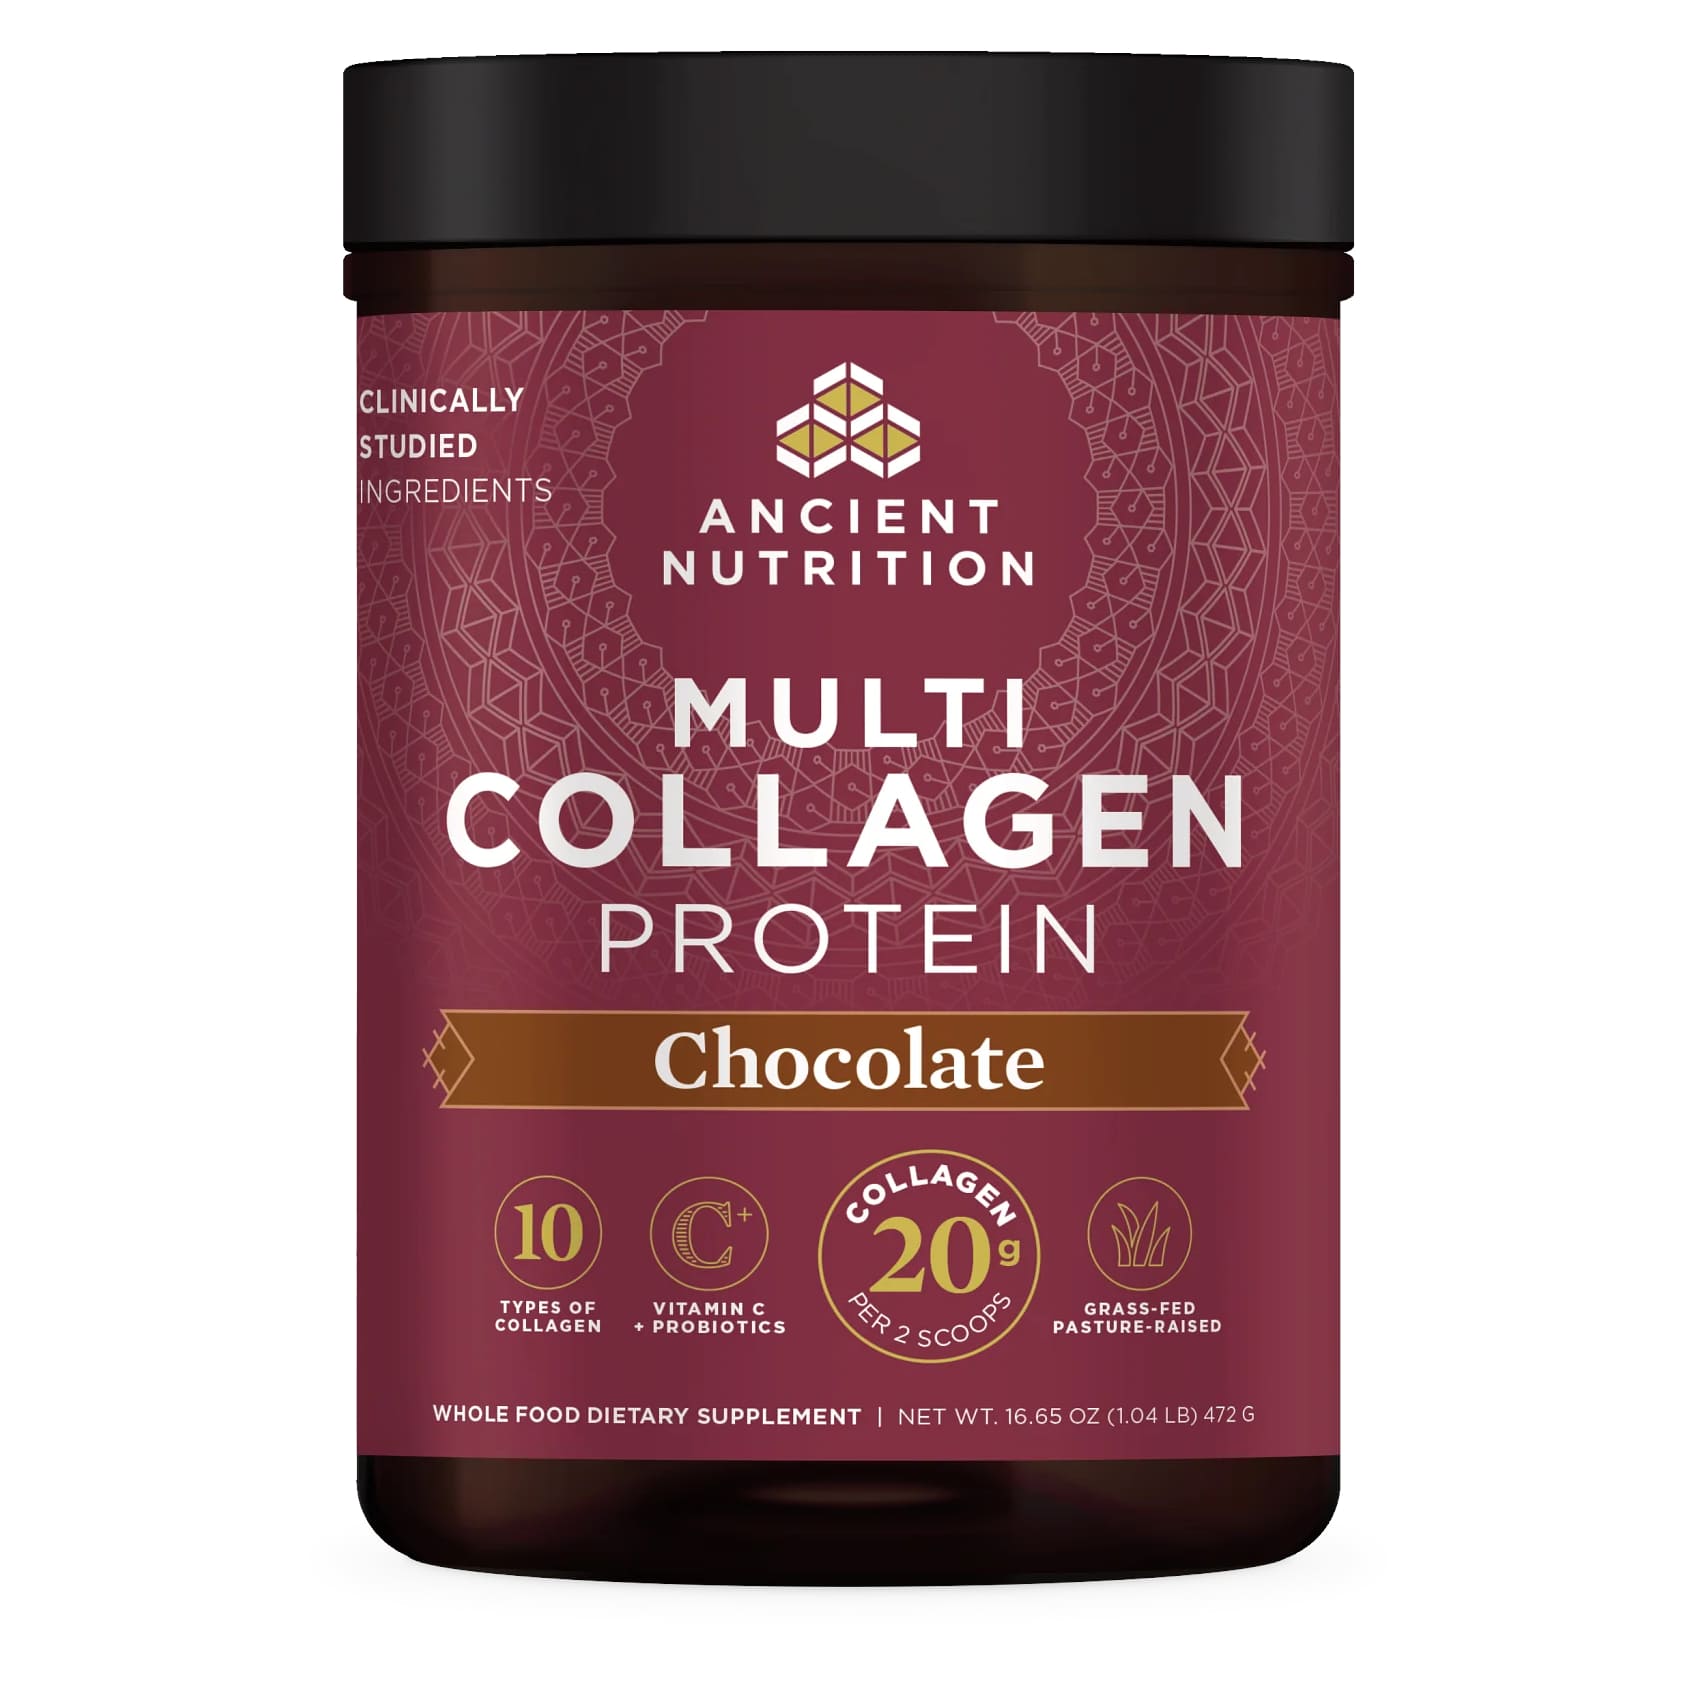 Коллаген Ancient Nutrition Multi Protein 10 Types Vitamin C + Probiotics Chocolate, 472 г биологически активная добавка beguana коллаген 180 гр